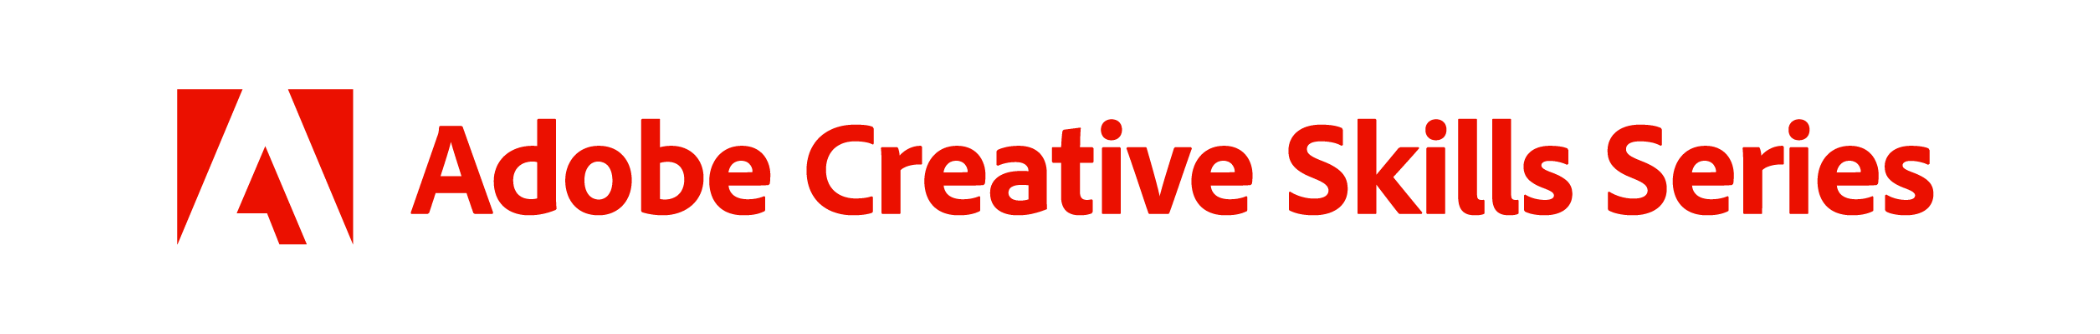 Adobe Creative Skills Series lockup